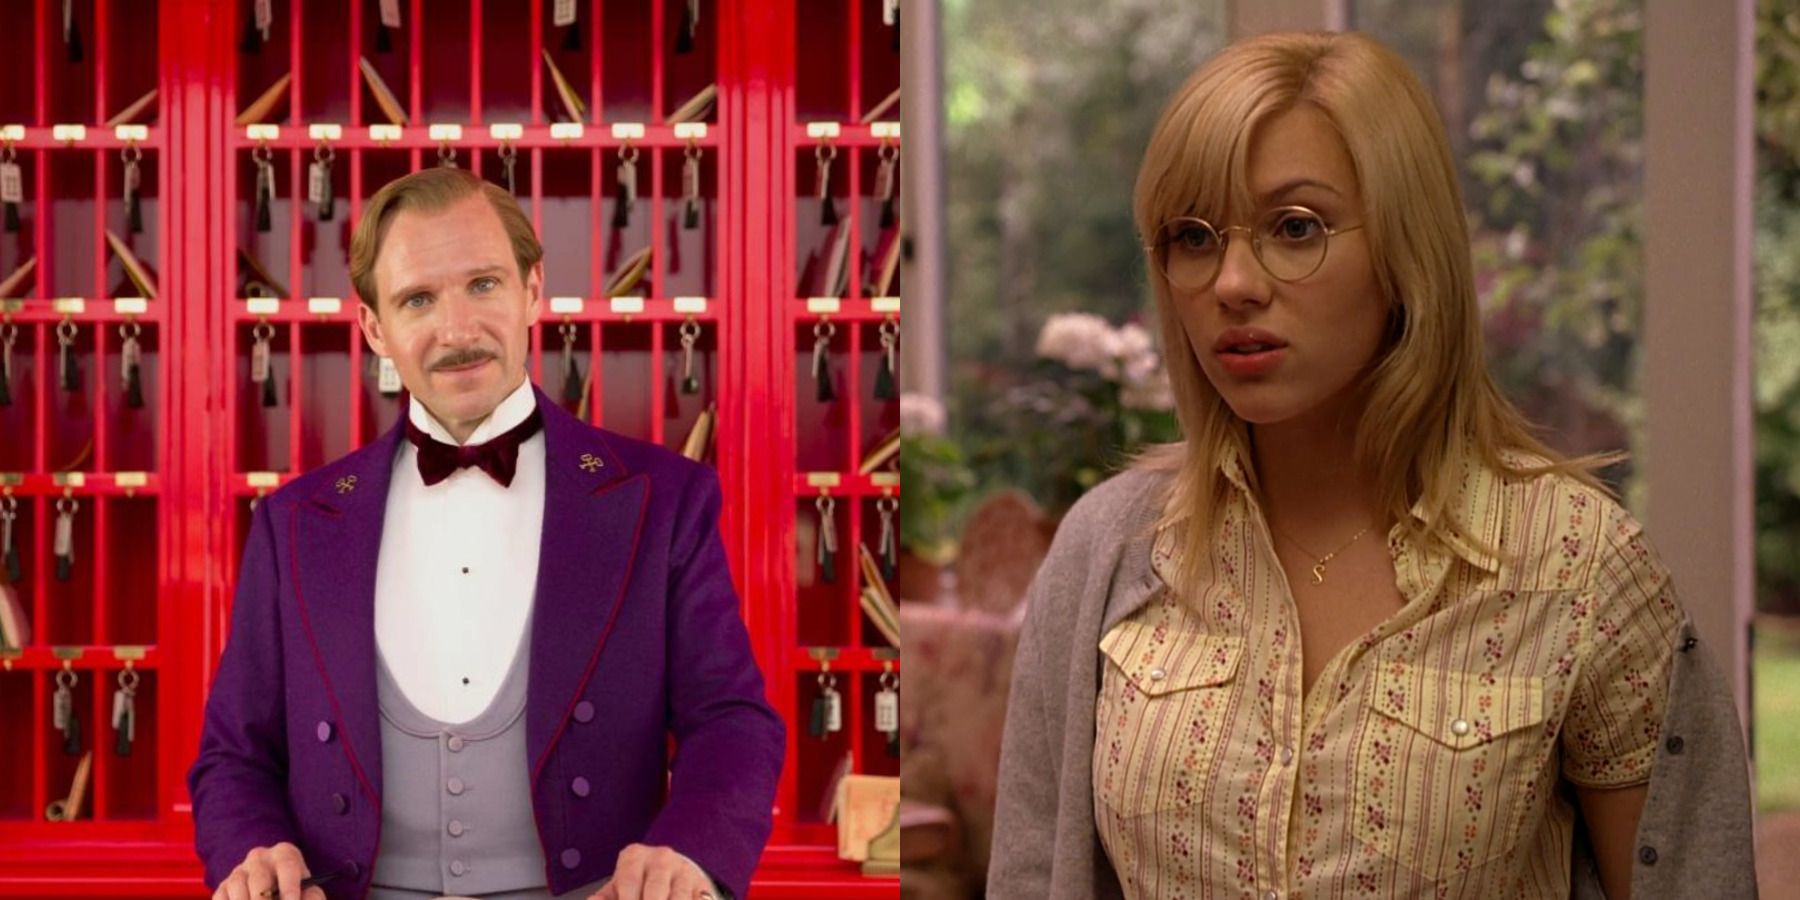 Ralph Fiennes in The Grand Budapest Hotel (left) Scarlett Johansson in Scoop (right)